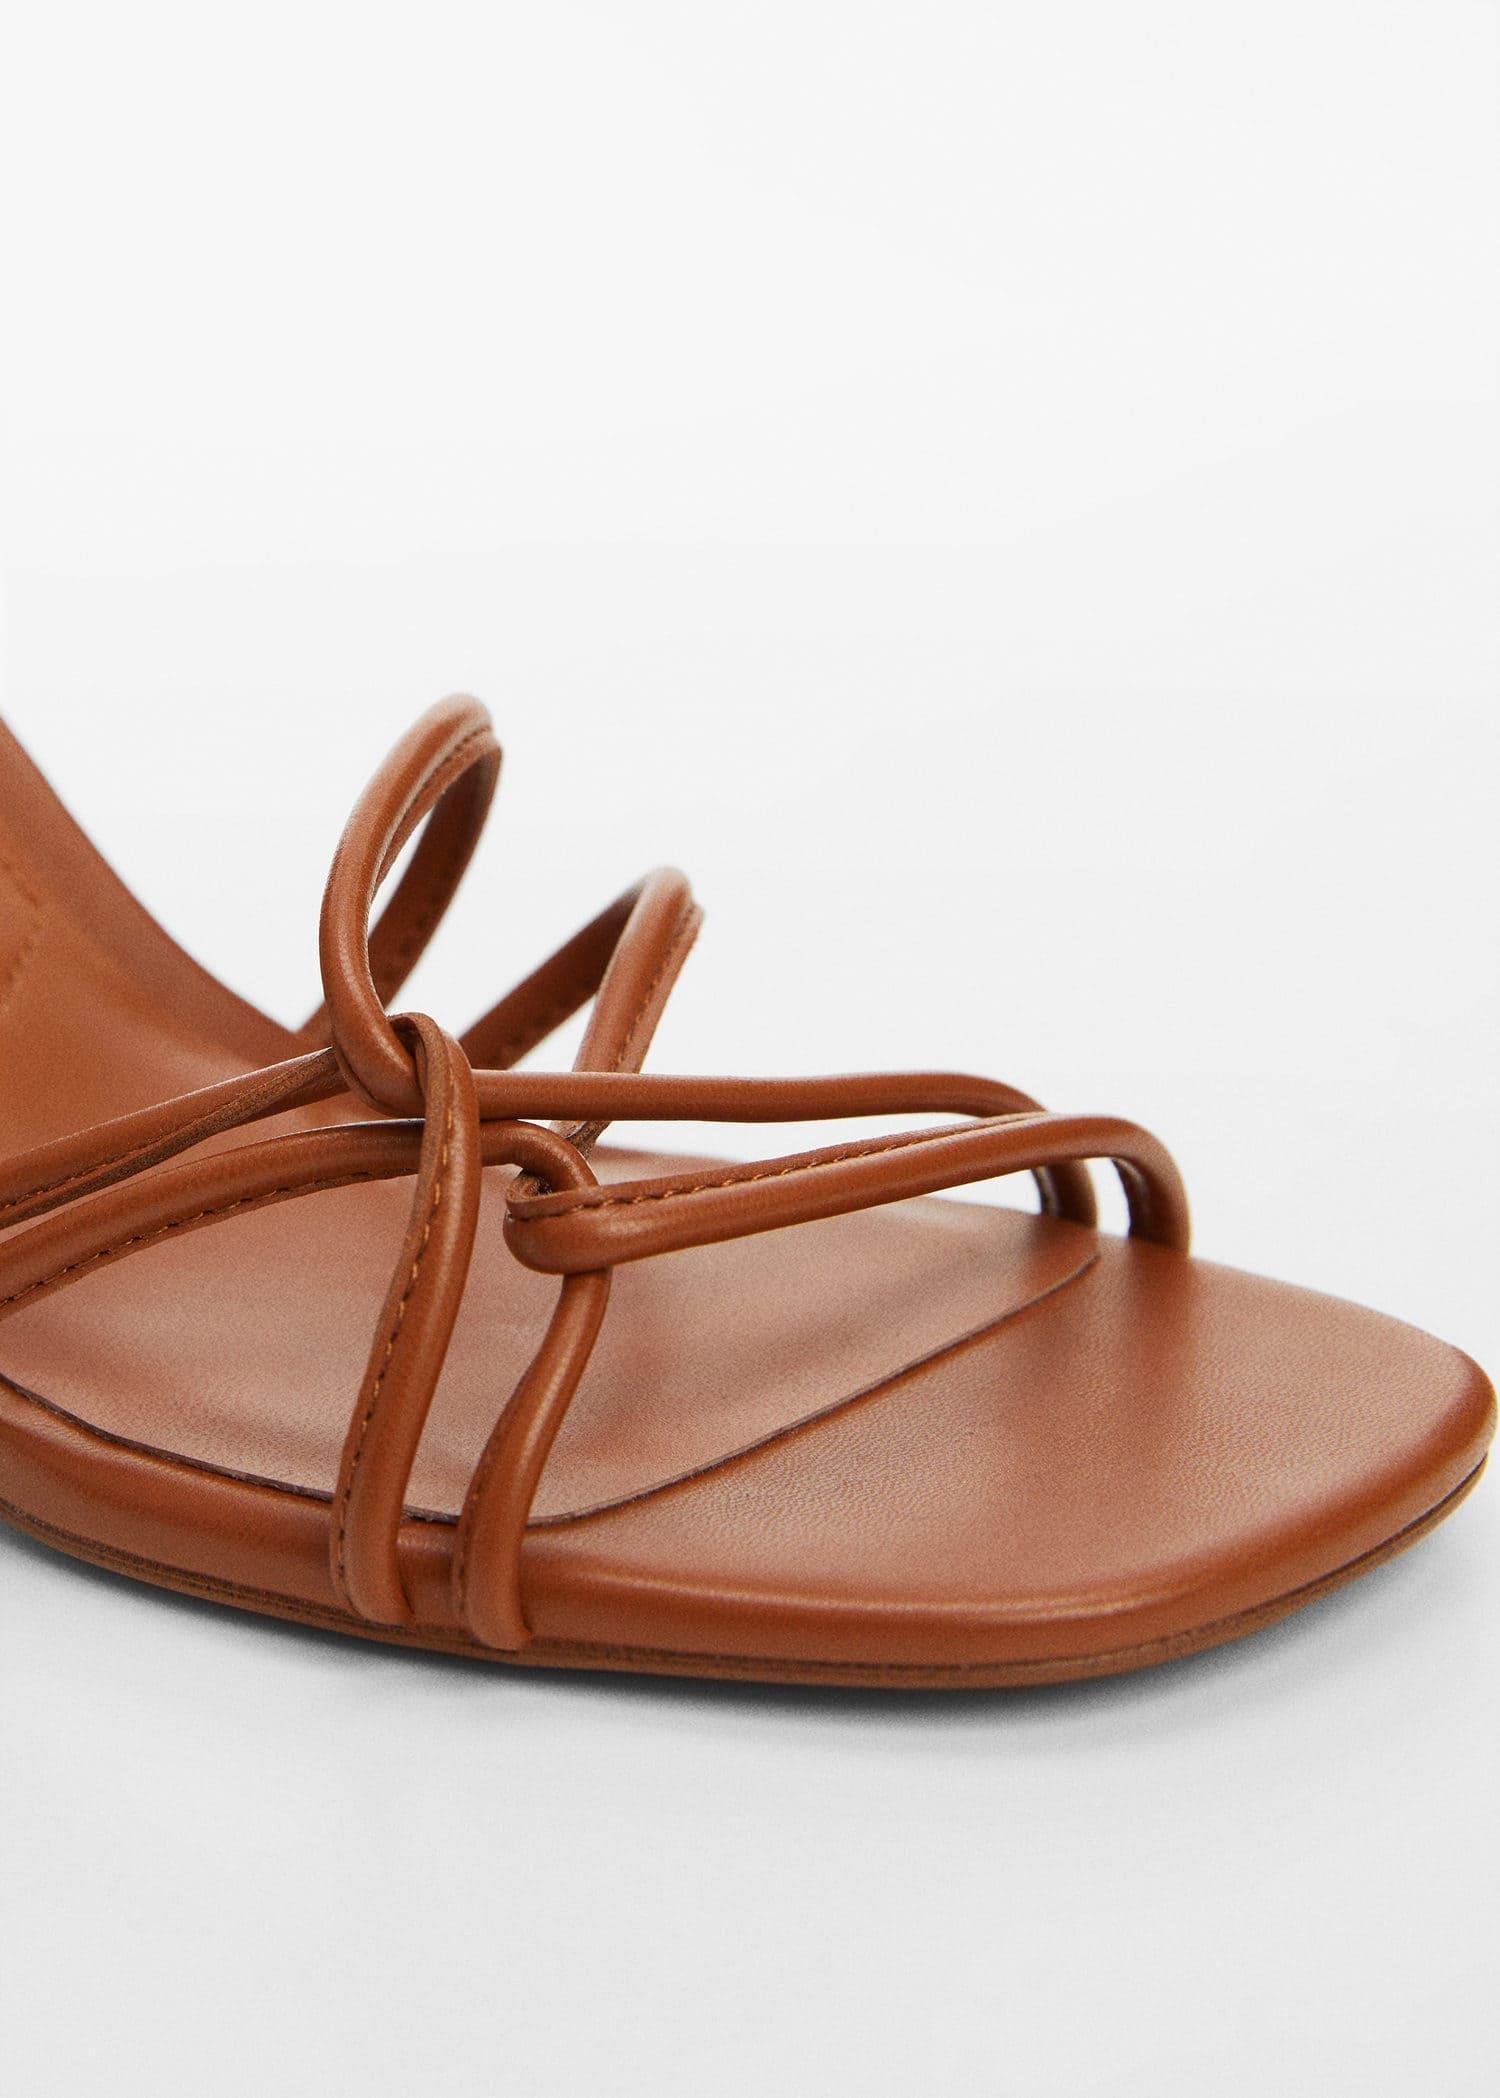 Mango - Brown Metallic Strappy Heeled Sandal